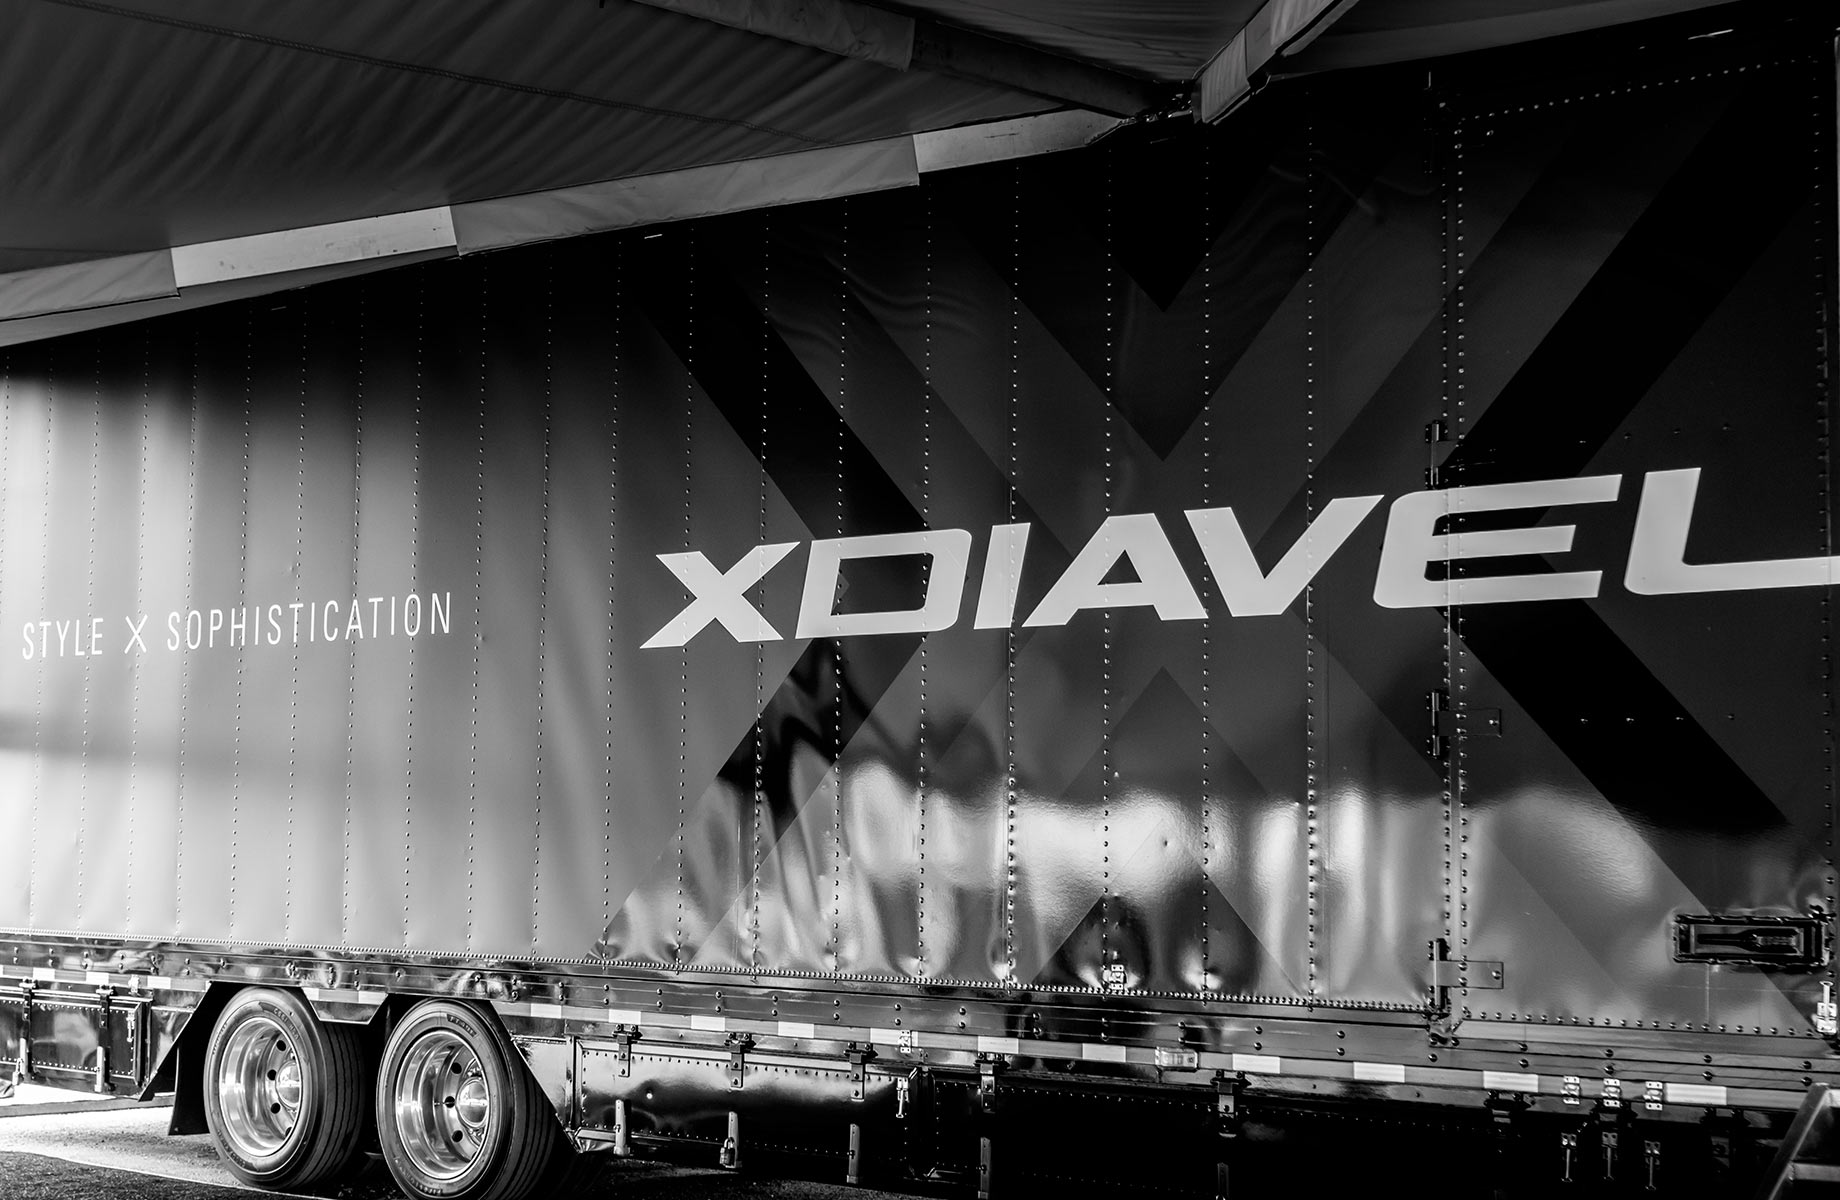 Branding of the XDiavel trailer - closeup